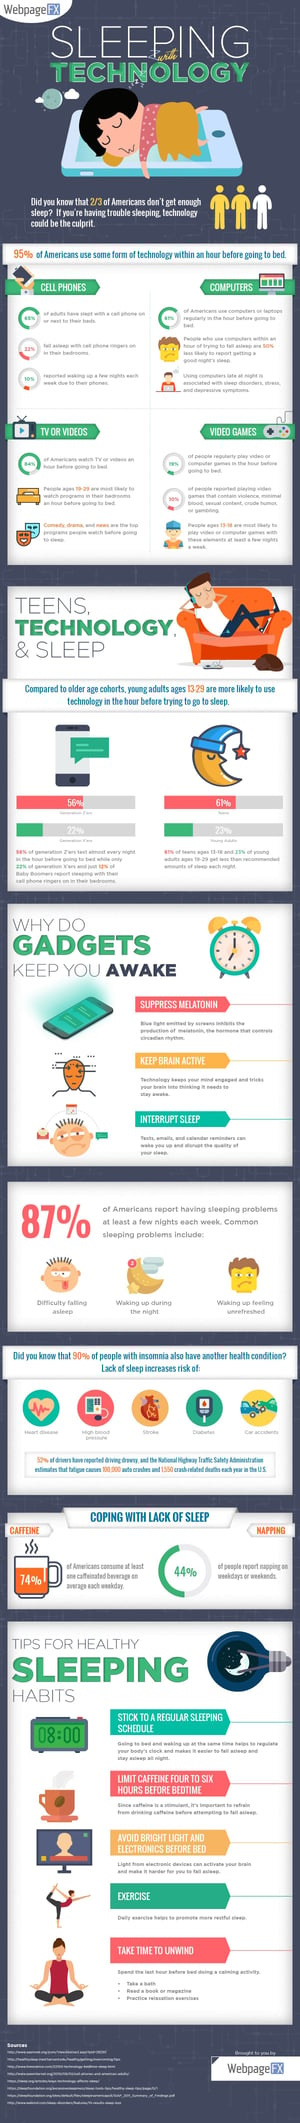 technology-and-sleep-infographic-1-1.jpg